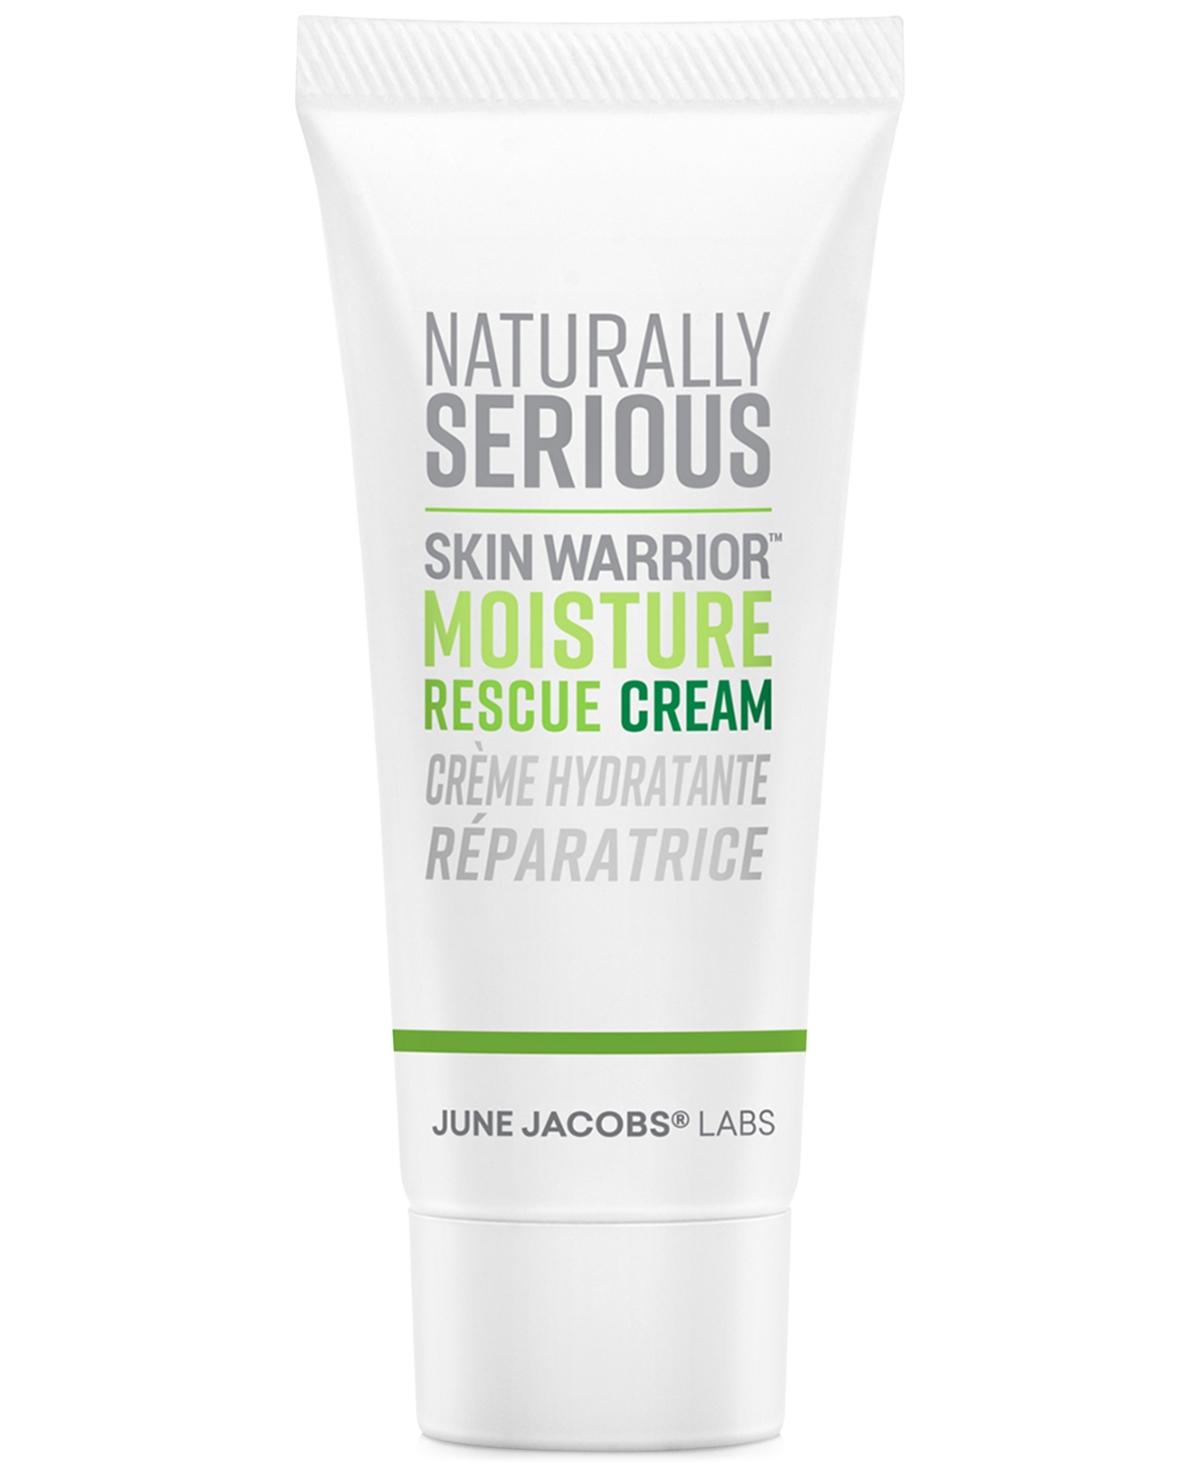 Skin Warrior Moisture Rescue Cream